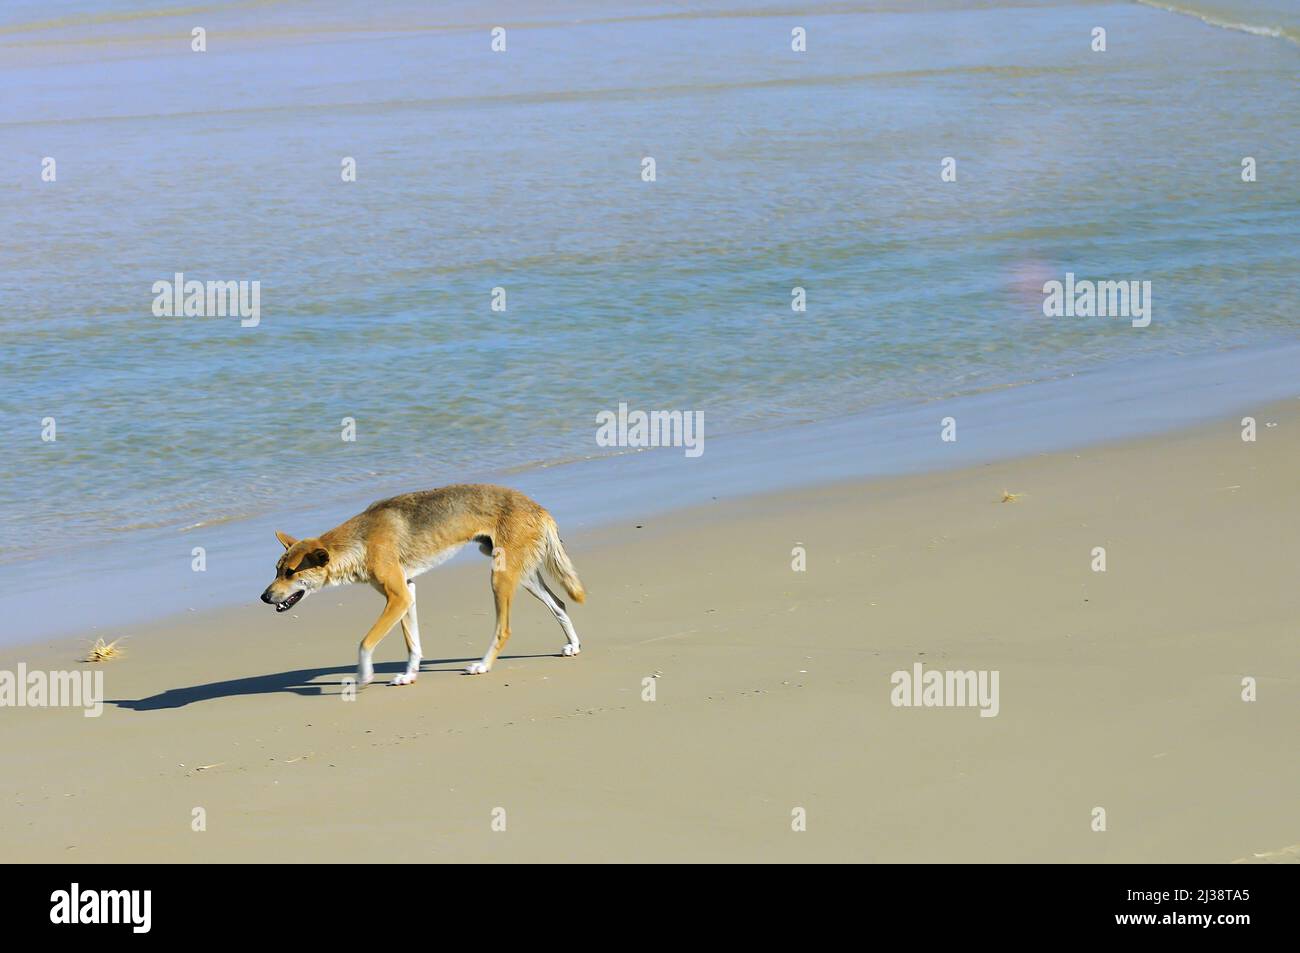 Dingo a wild inhabitant protected species  .walking on the beach at Frazer Island  K'gari Queensland Australia Stock Photo